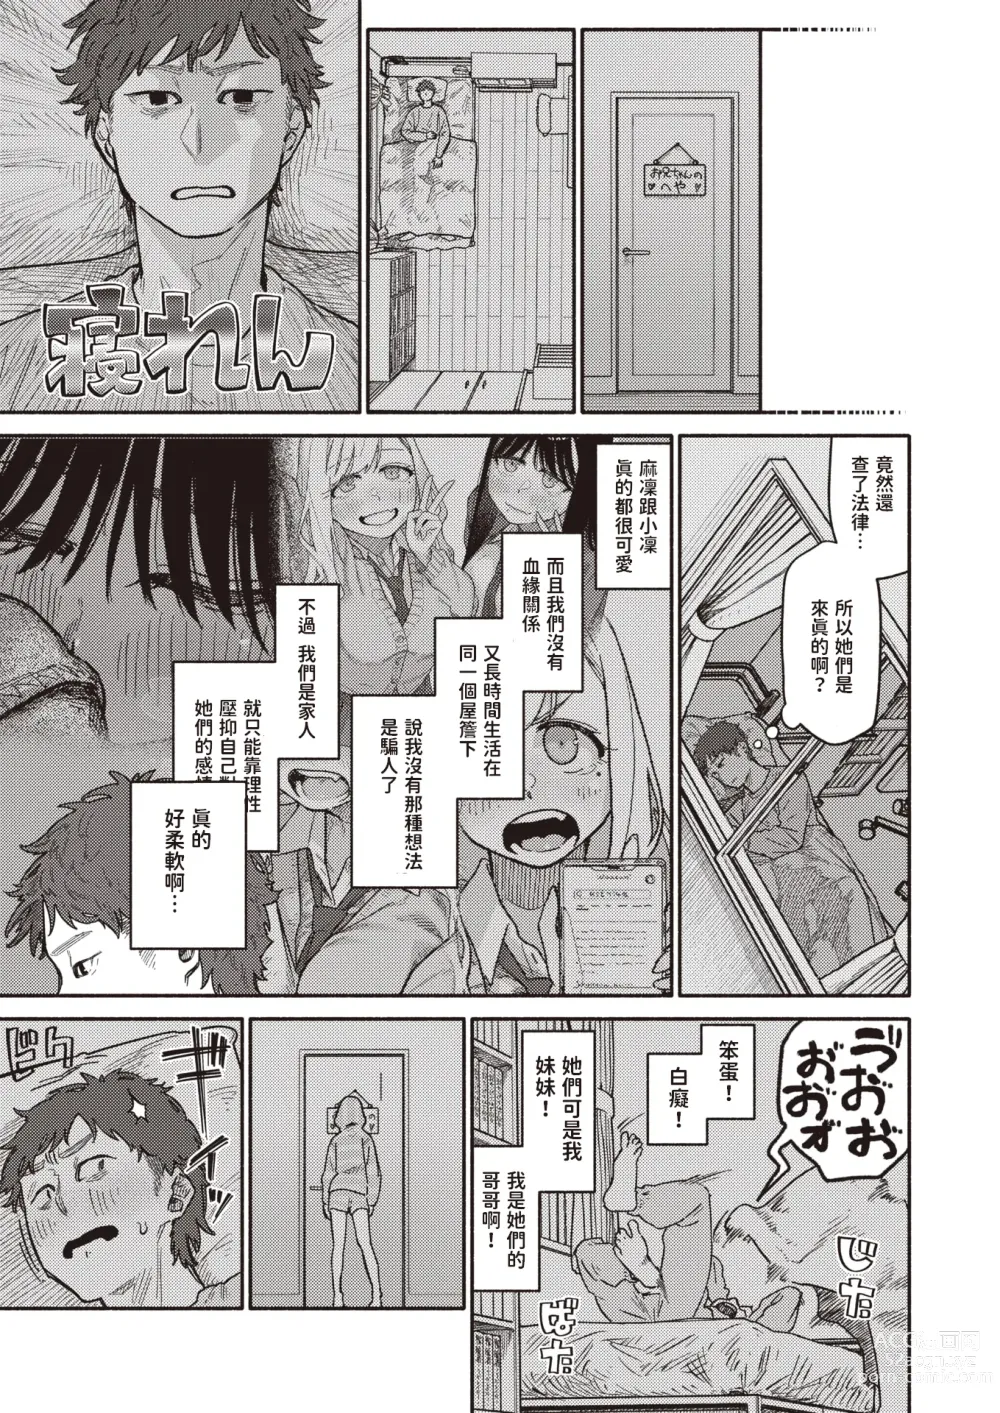 Page 13 of manga Futago wa Onii-chan ga Osuki